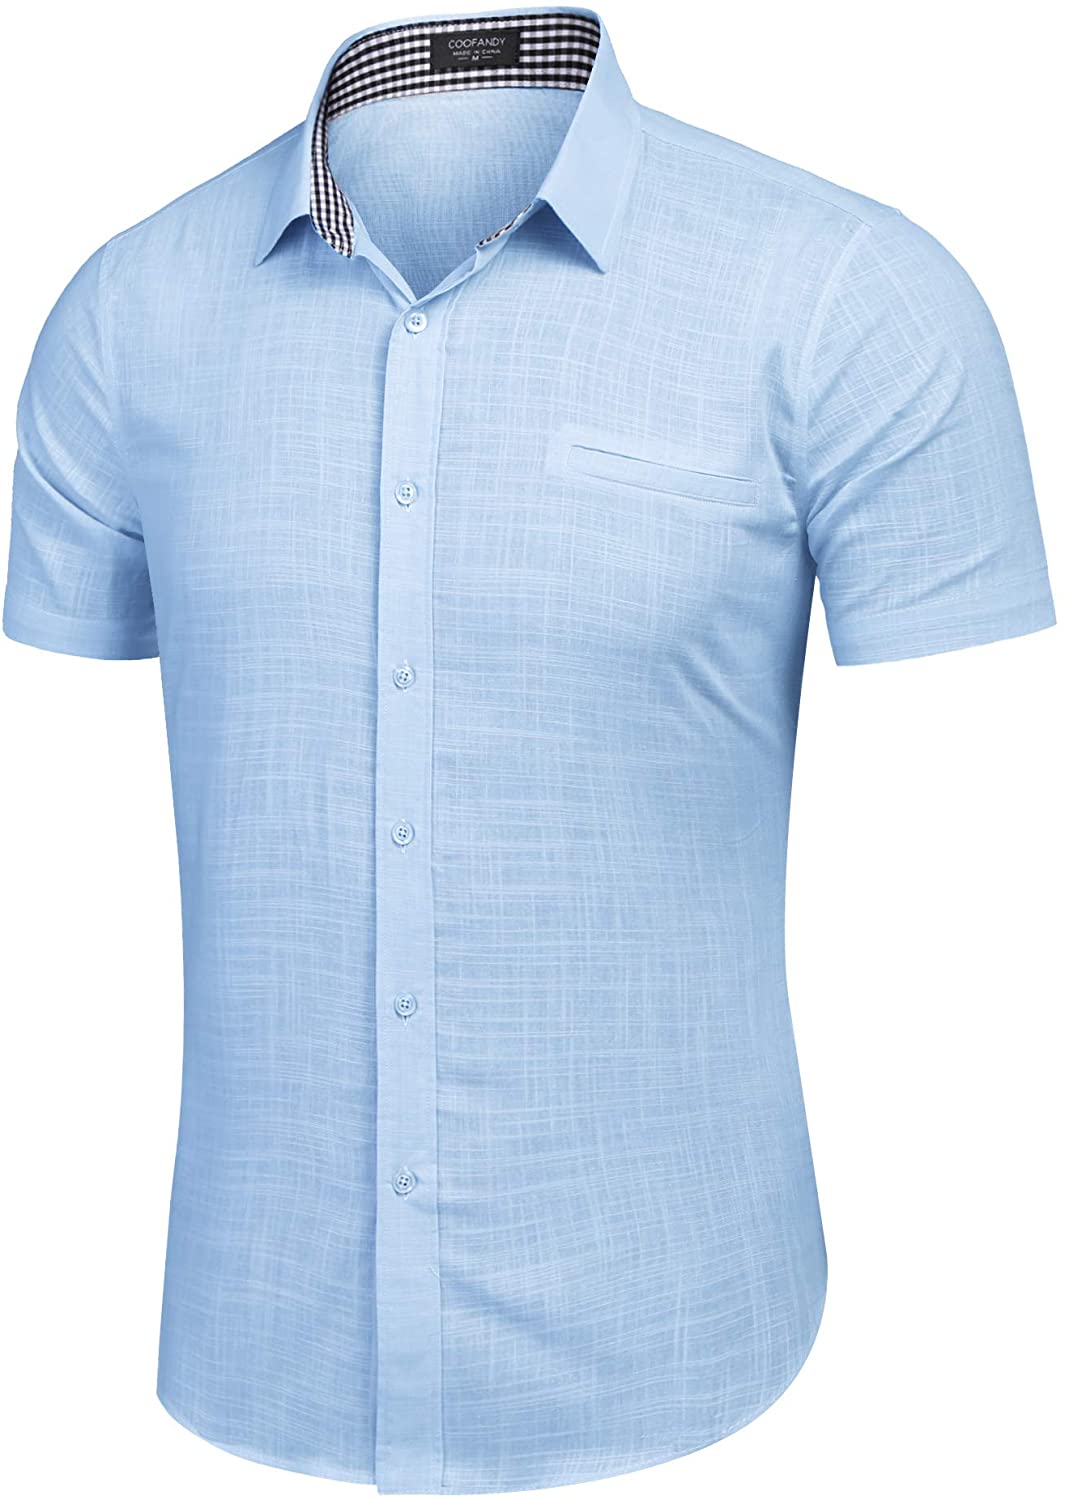 COOFANDY Men's Regular-Fit Short-Sleeve Solid Linen Cotton Shirt Casual ...